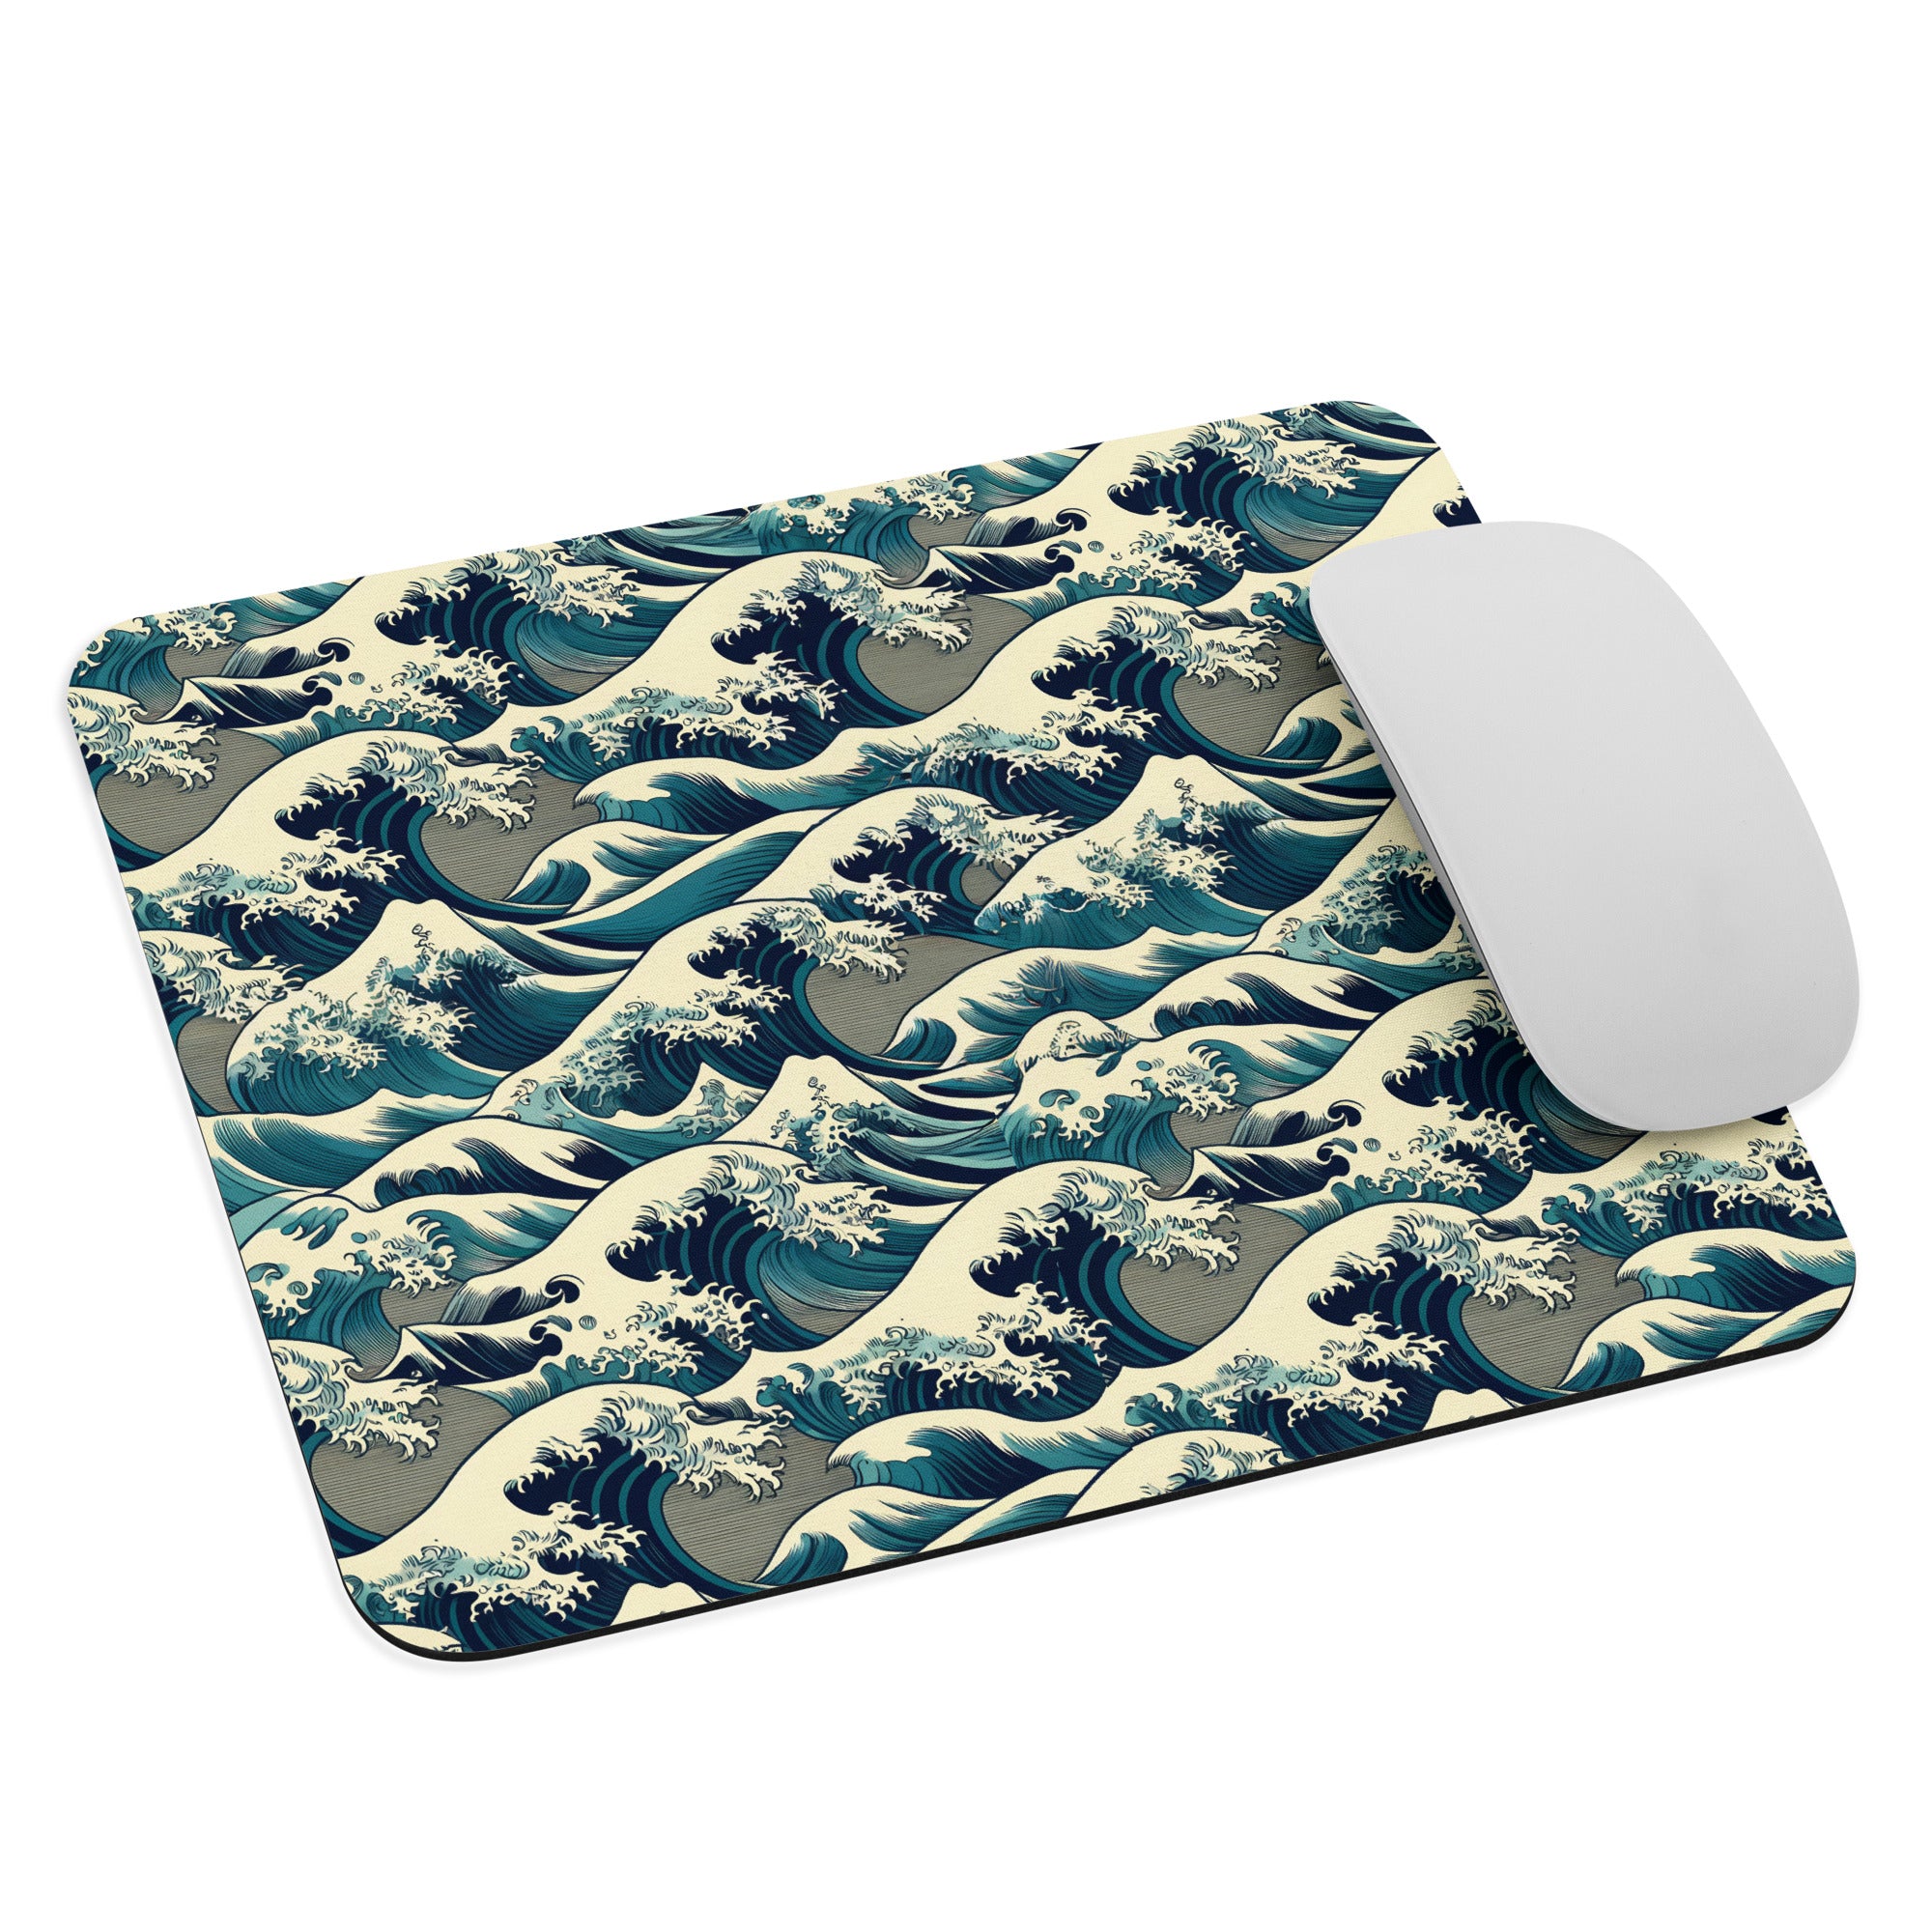 Hokusai 'The Great Wave off Kanagawa' Famous Painting Mouse Pad | Premium Art Mouse Pad